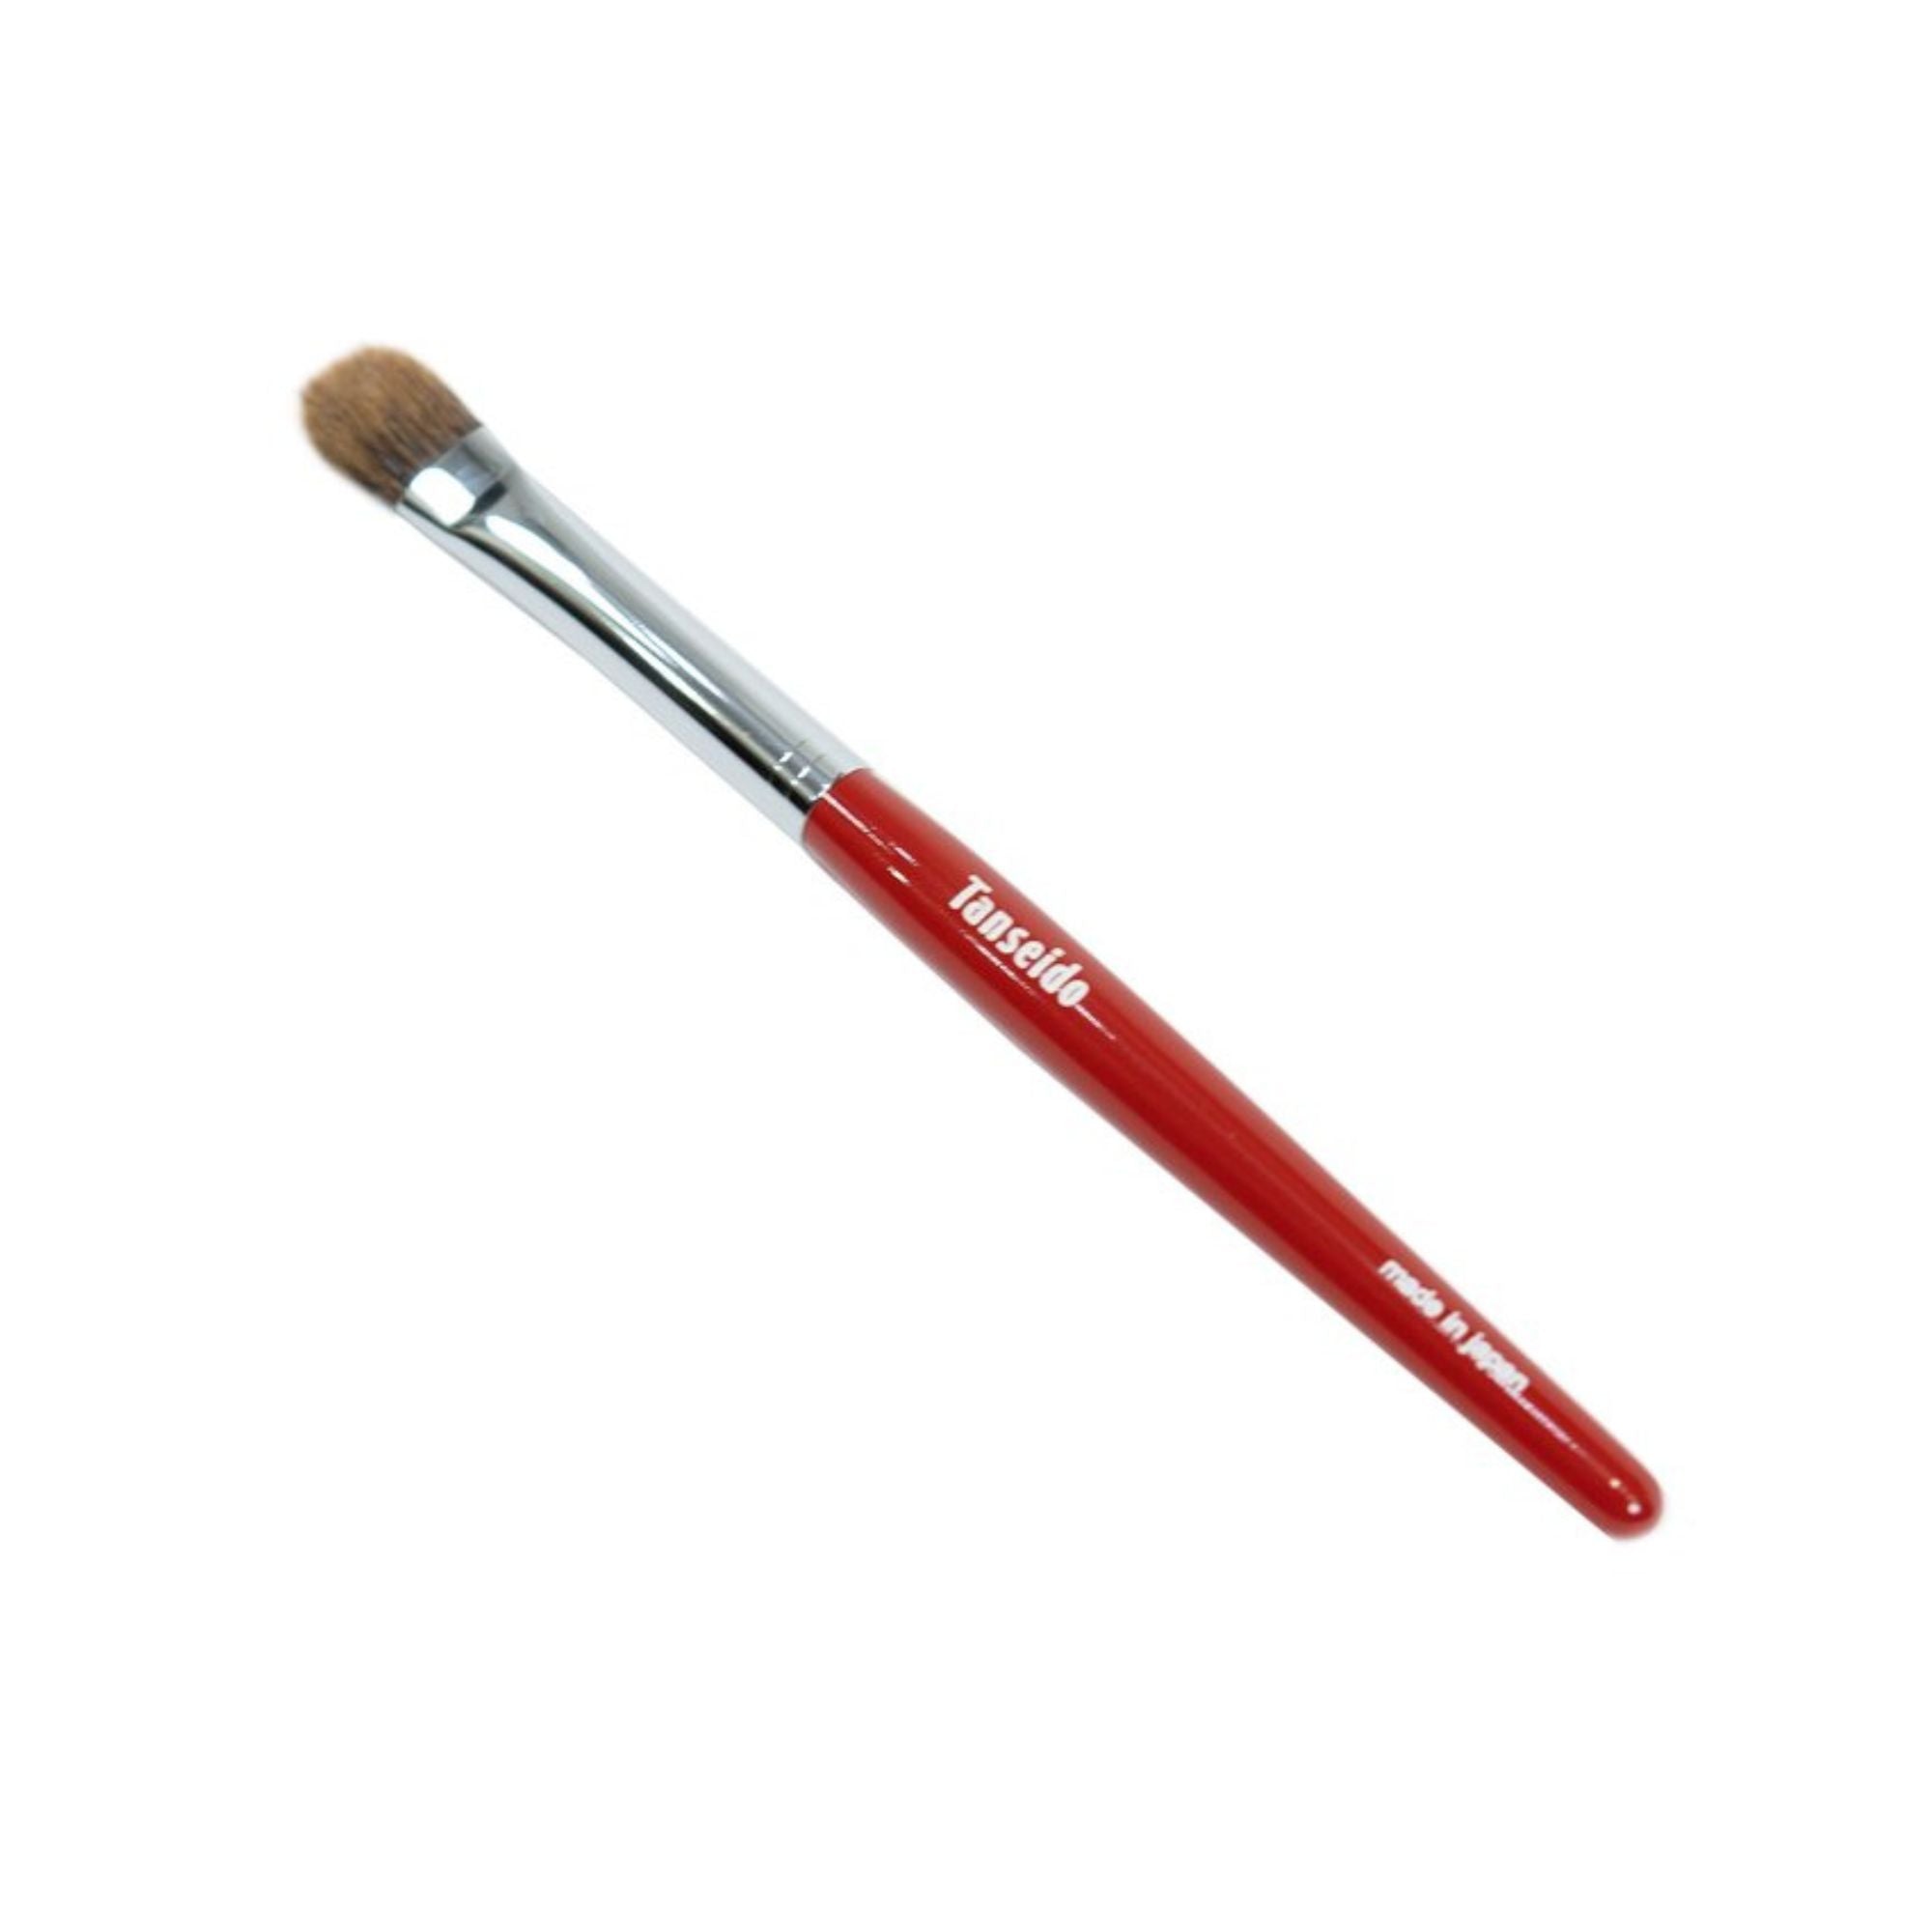 Tanseido CQ 10SP Eyeshadow Brush - Fude Beauty, Japanese Makeup Brushes